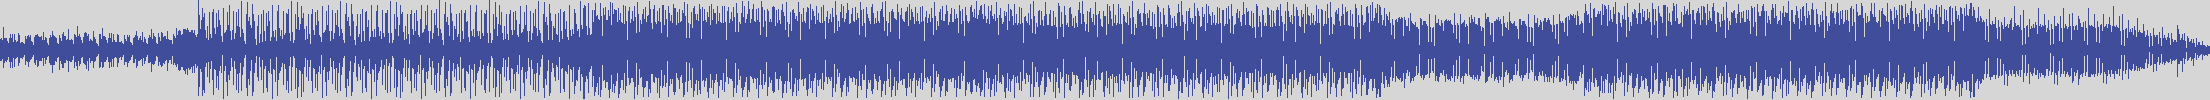 noclouds_chillout [NOC124] Shibuya - Ten [Original Mix] audio wave form